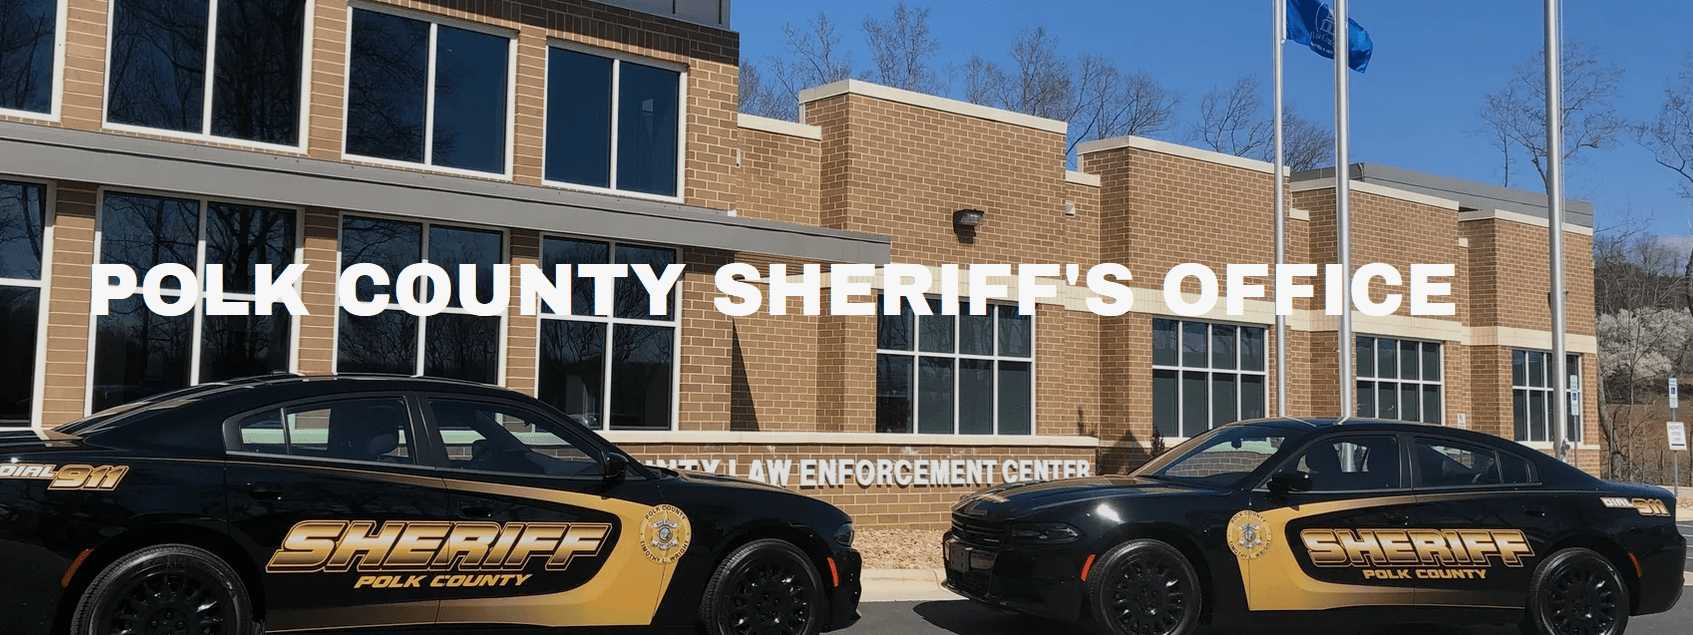 Polk County Sheriff Department